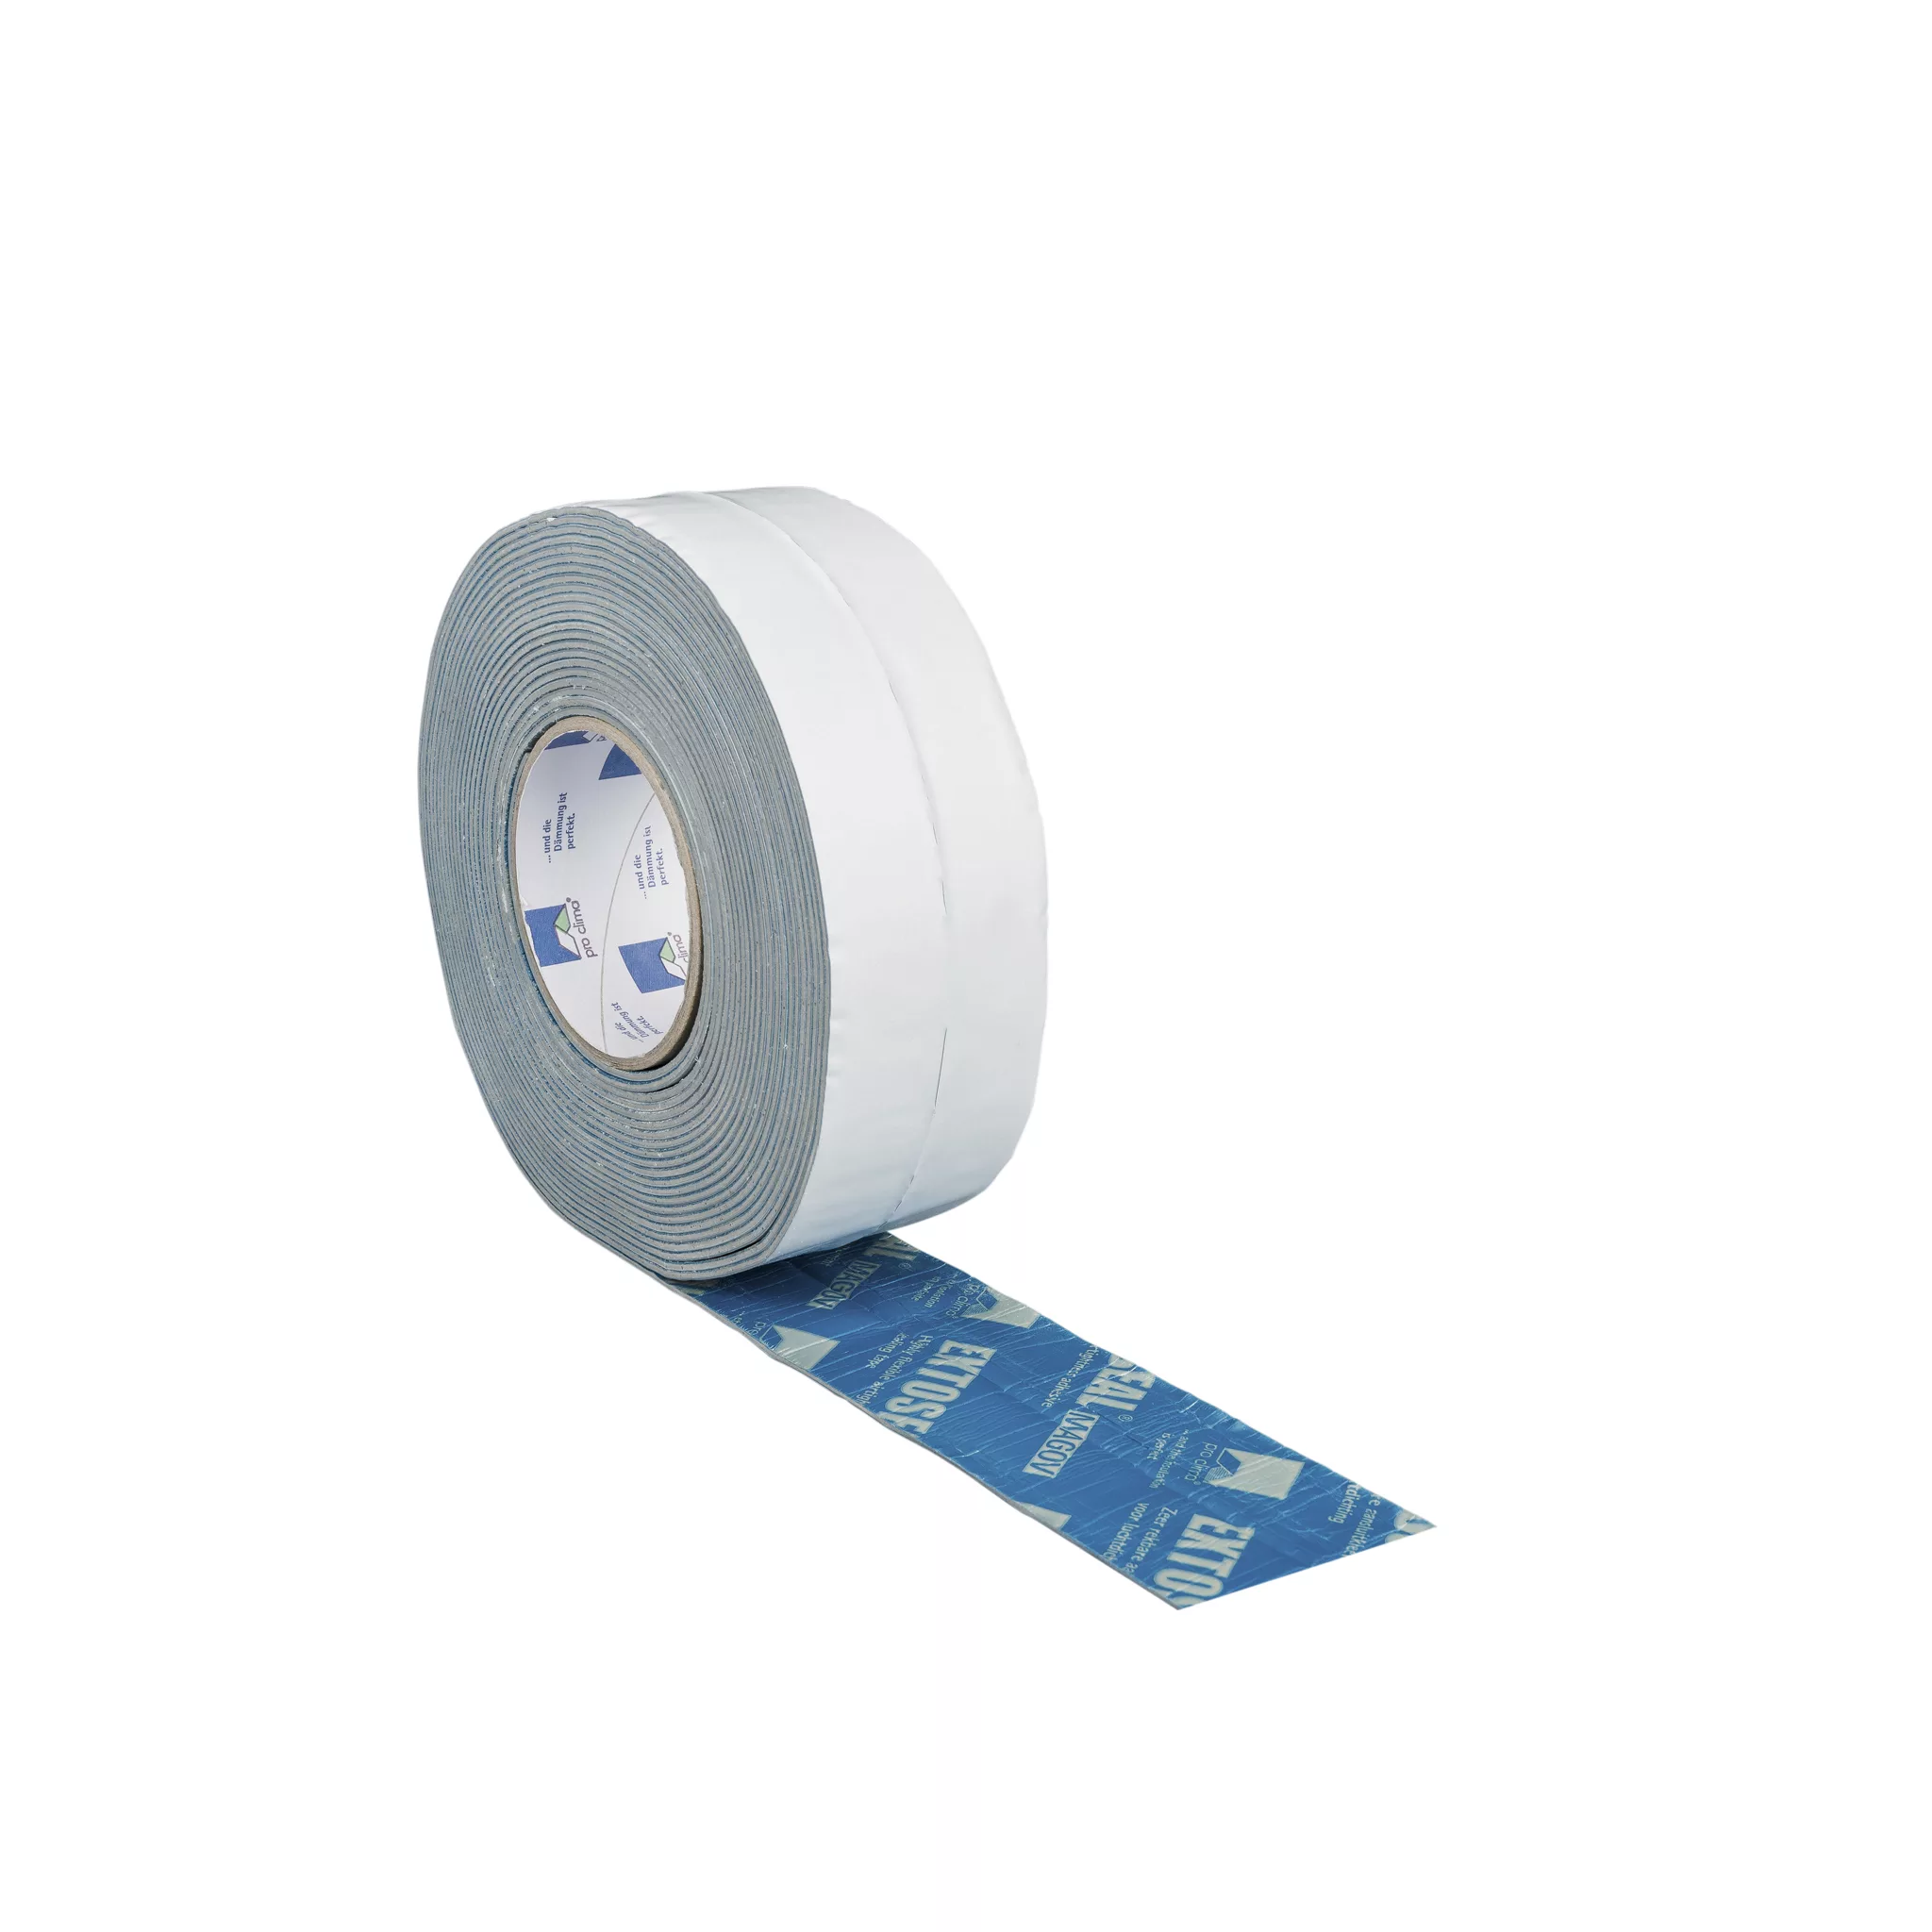 Pro Clima Extoseal Magov air tightness tape